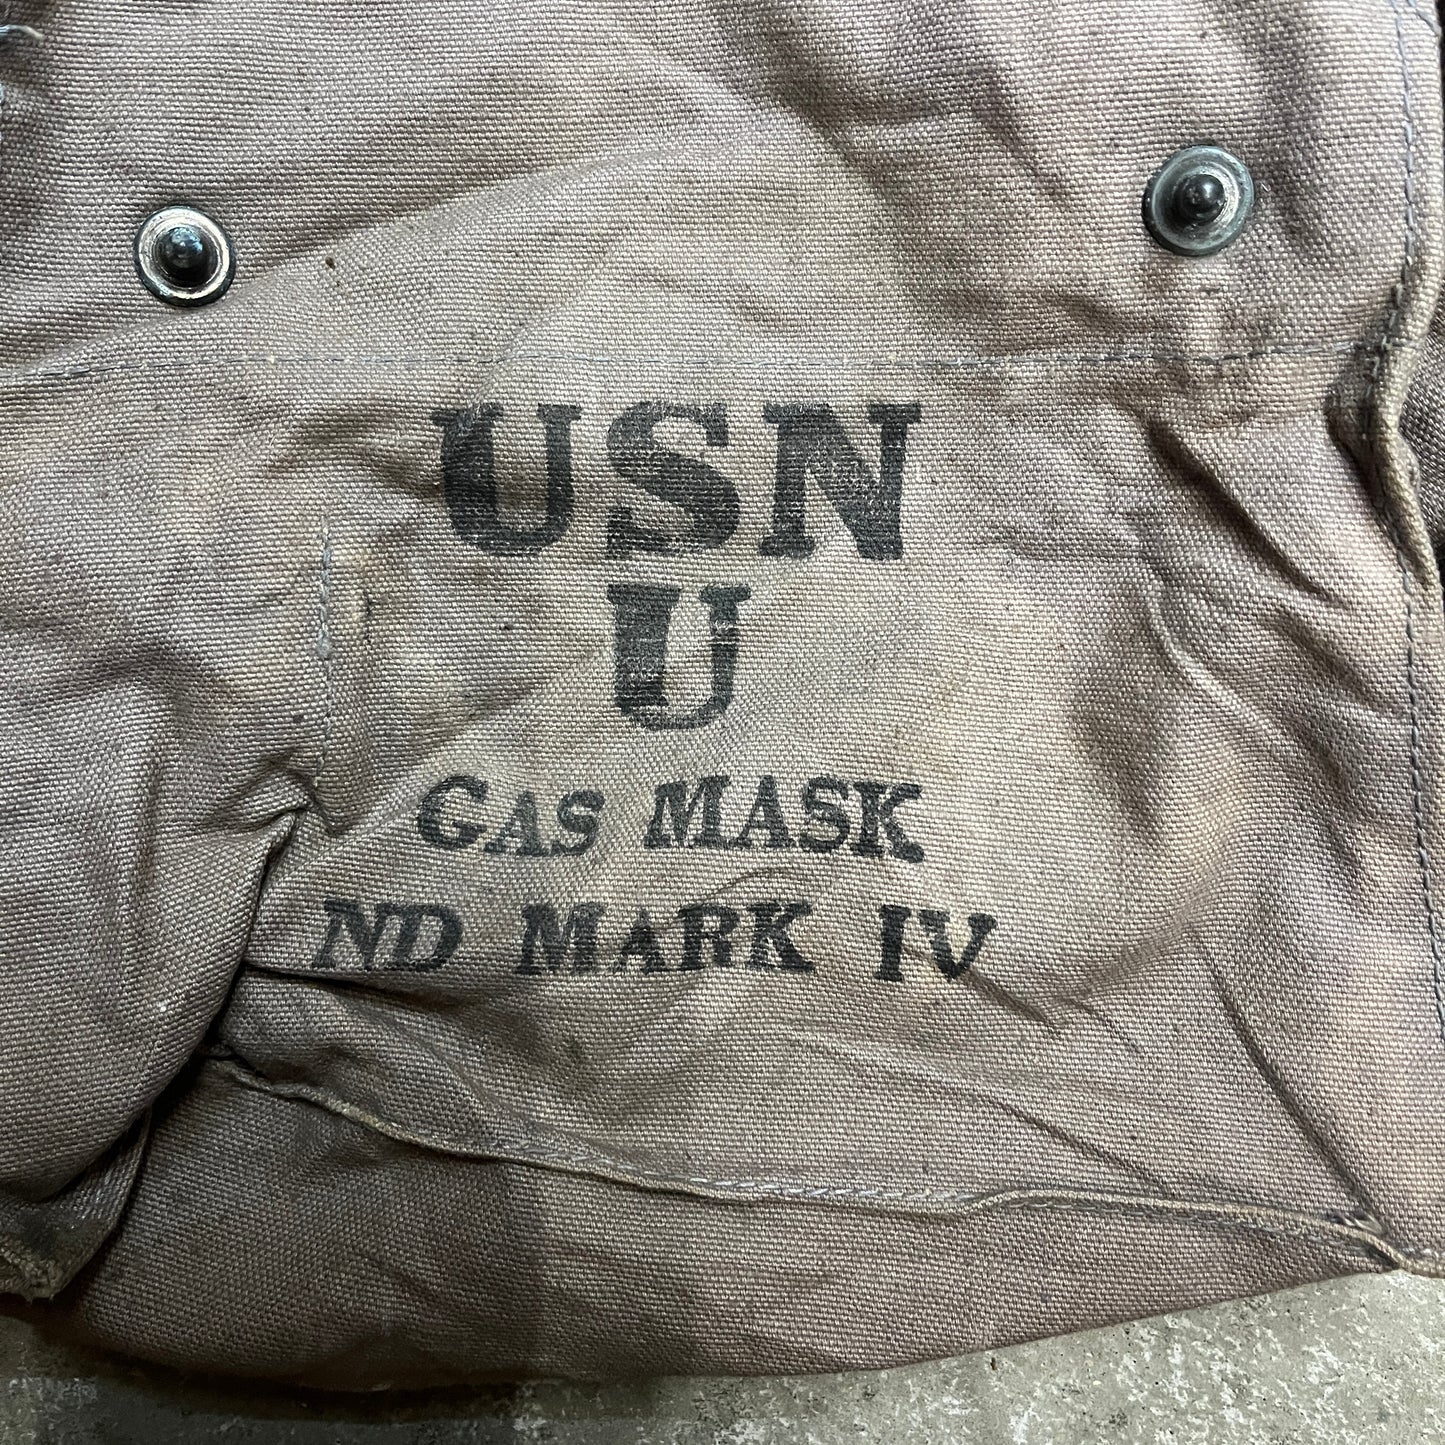 US Navy Gas Mask Bag